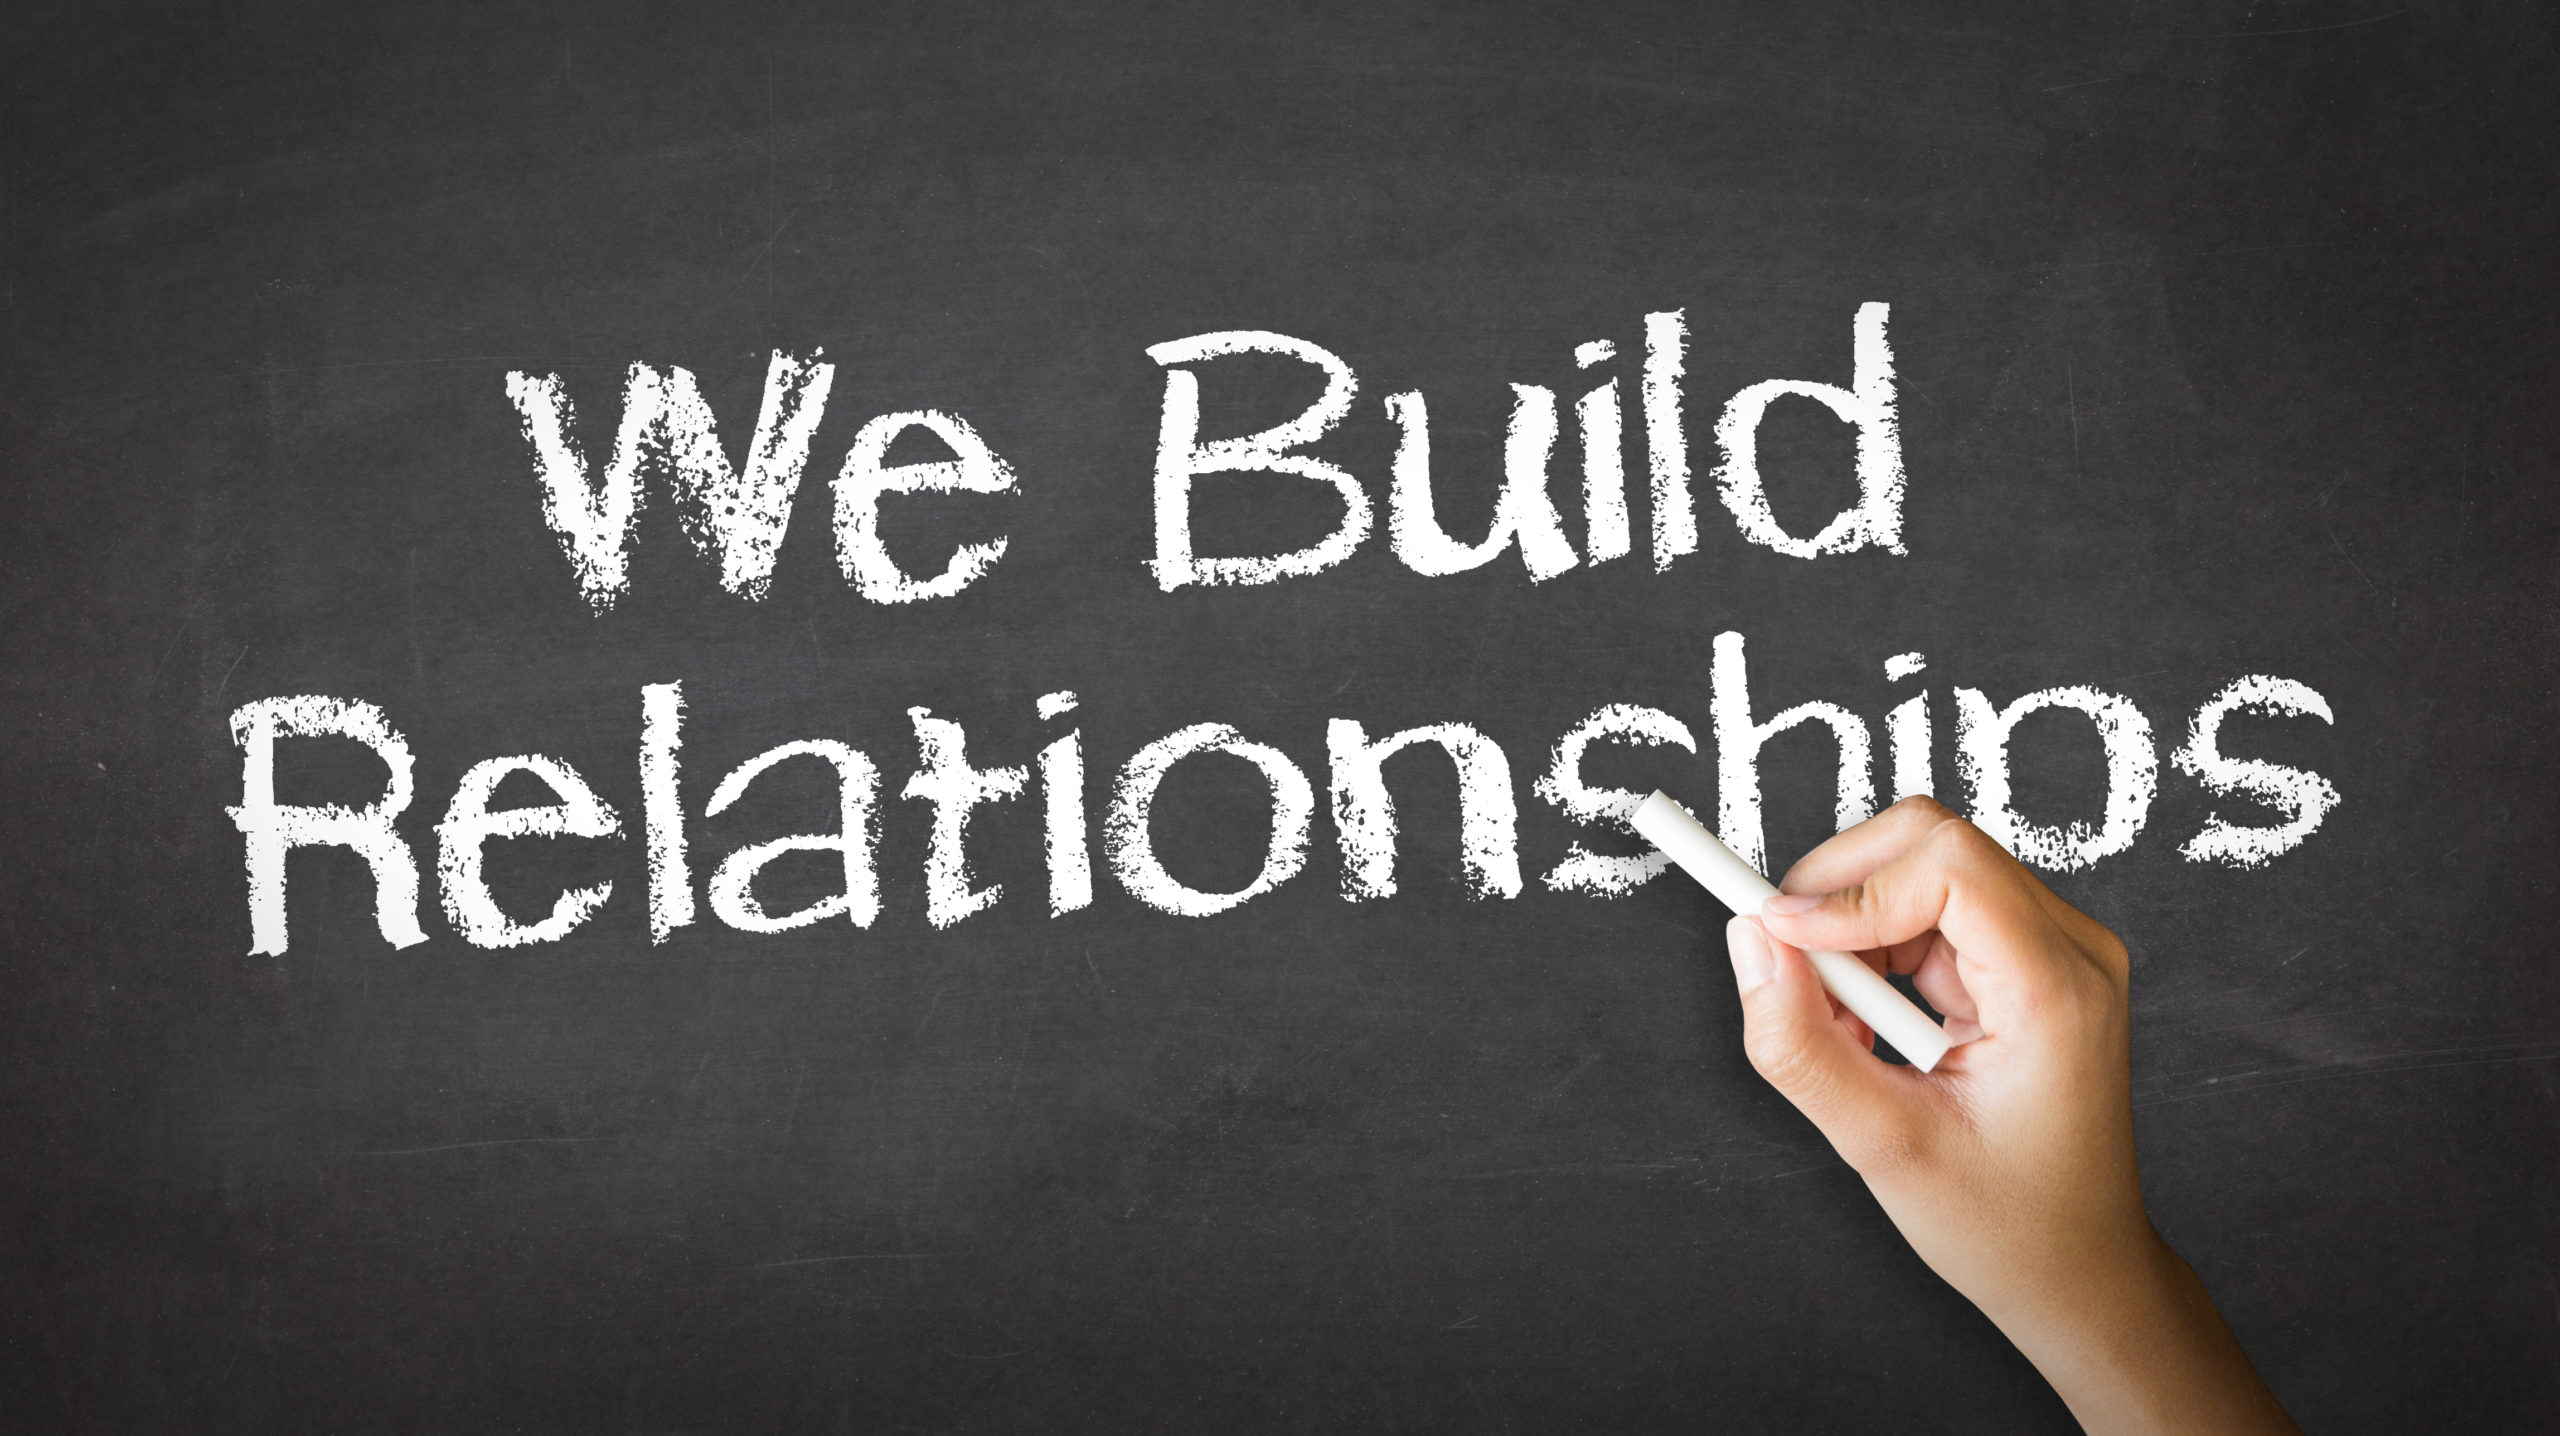 We Build Relationships